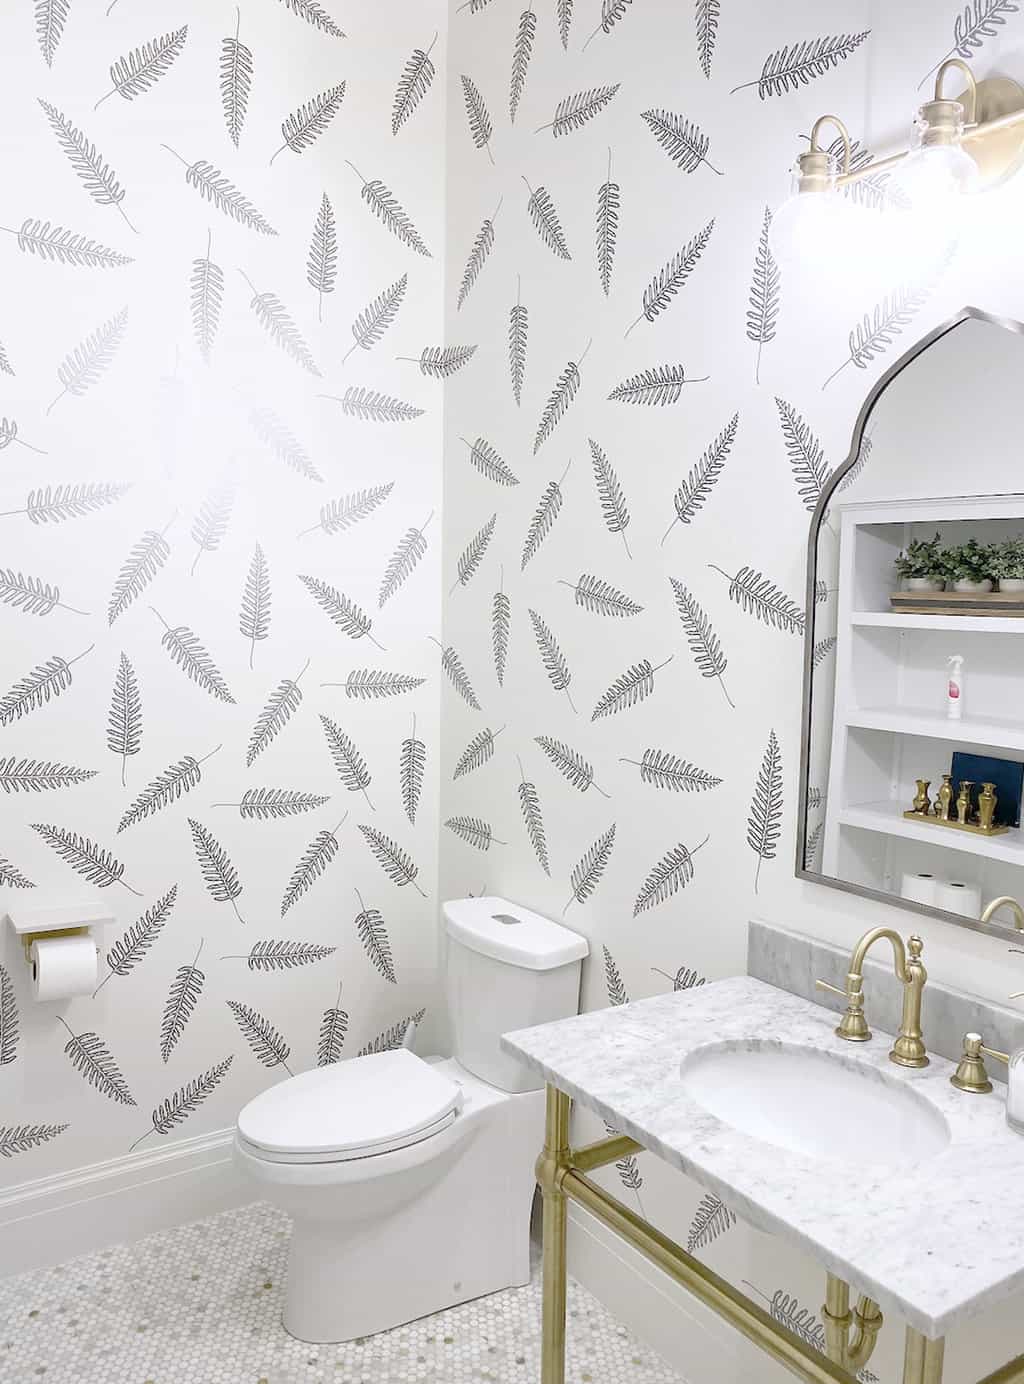 an image of diy fern cricut decals turned into wallpaper in a powder bathroom